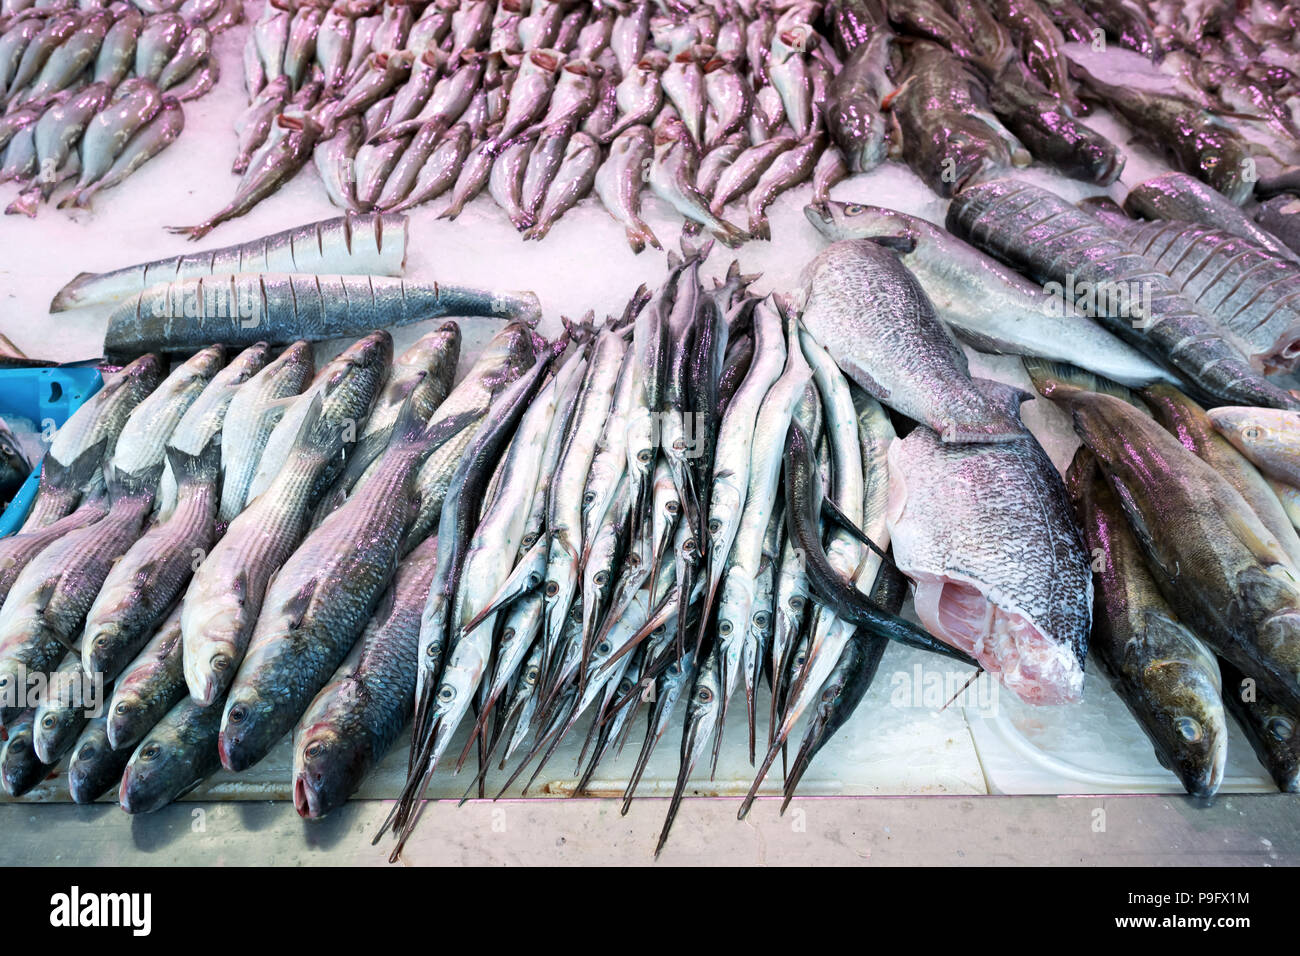 Assortimento di pesce fresco in pescheria Foto Stock